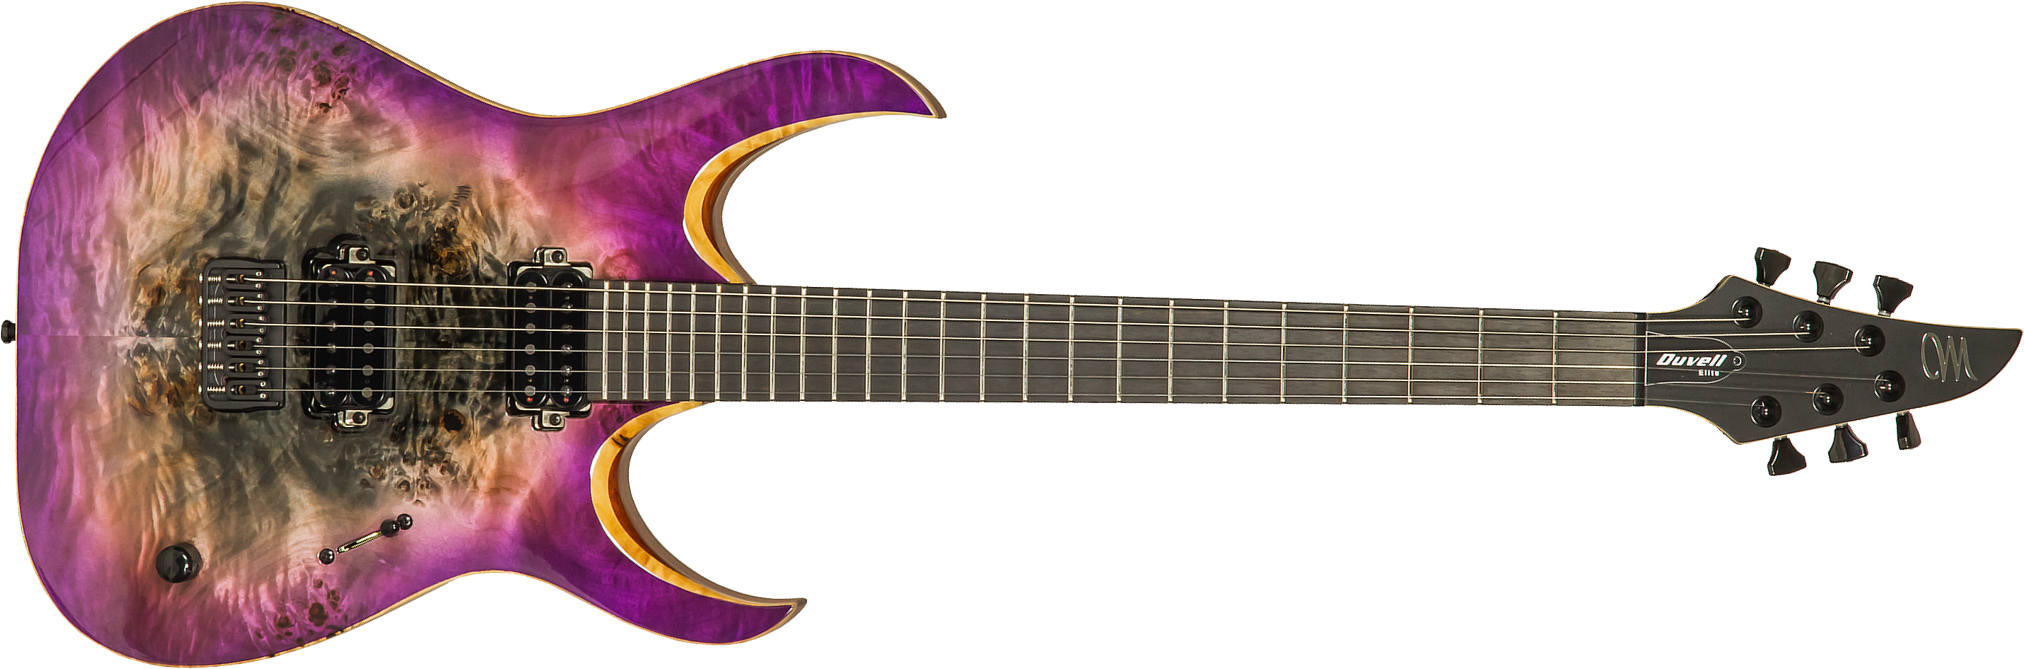 Mayones Guitars Duvell Elite 6 Hh Seymour Duncan Ht Eb #df2105470 - Supernova Purple - Guitarra electrica metalica - Main picture